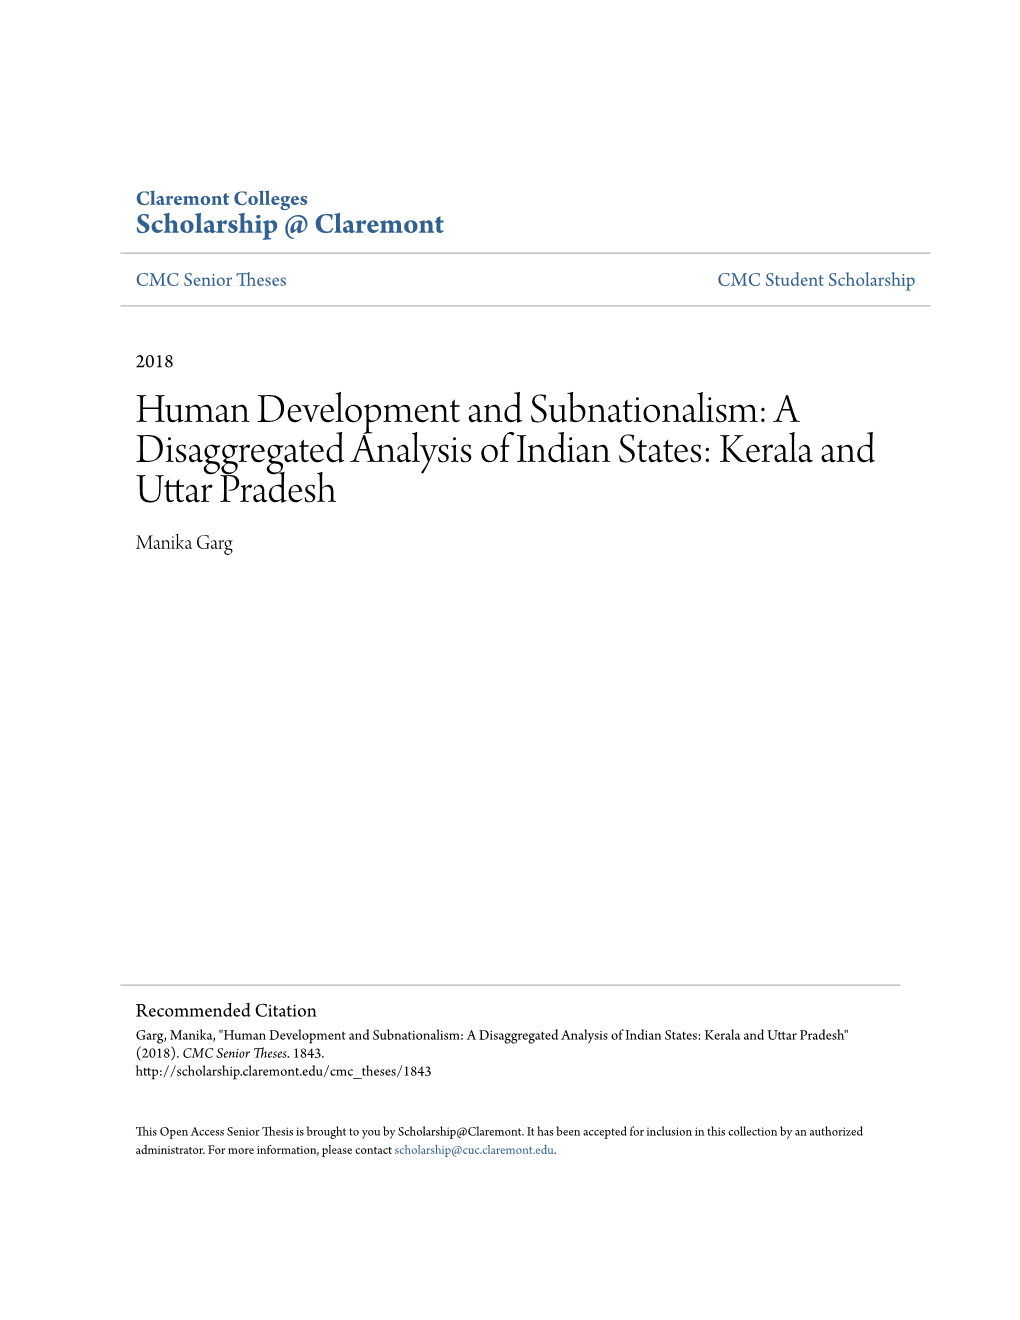 Human Development and Subnationalism: a Disaggregated Analysis of Indian States: Kerala and Uttar Pradesh Manika Garg